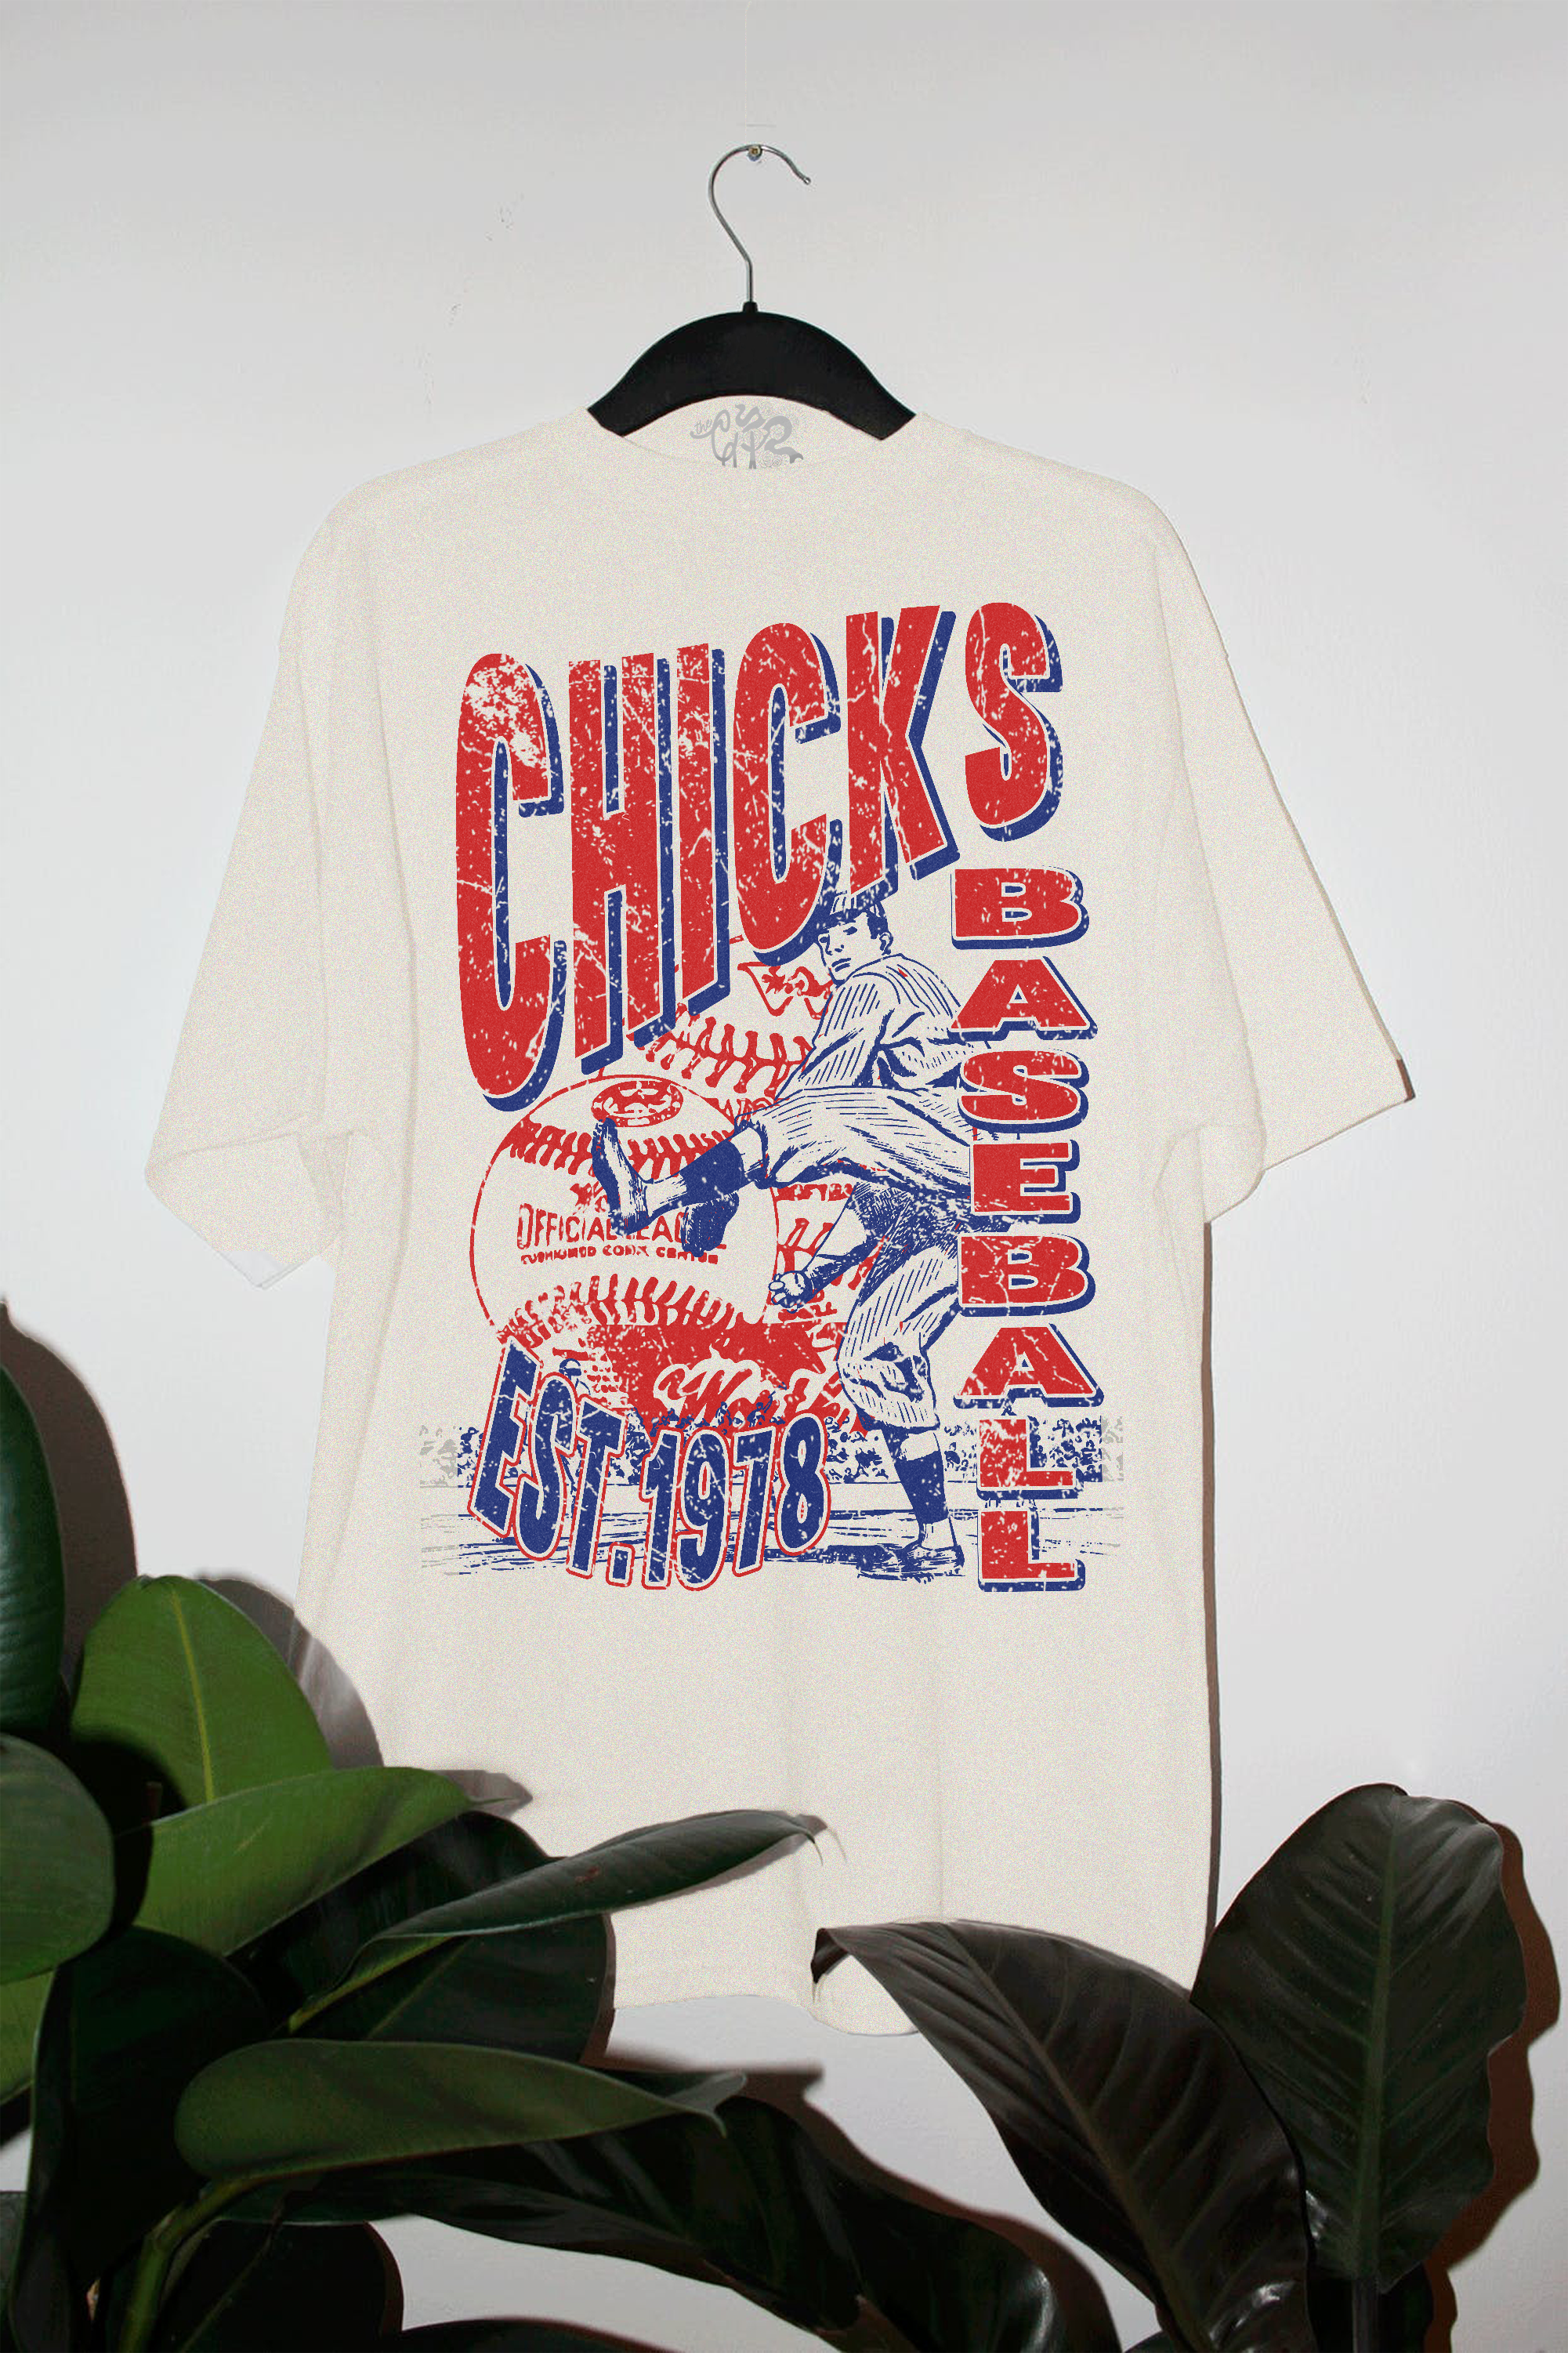 Underground Original Design:Chicks Baseball Oversized TShirt